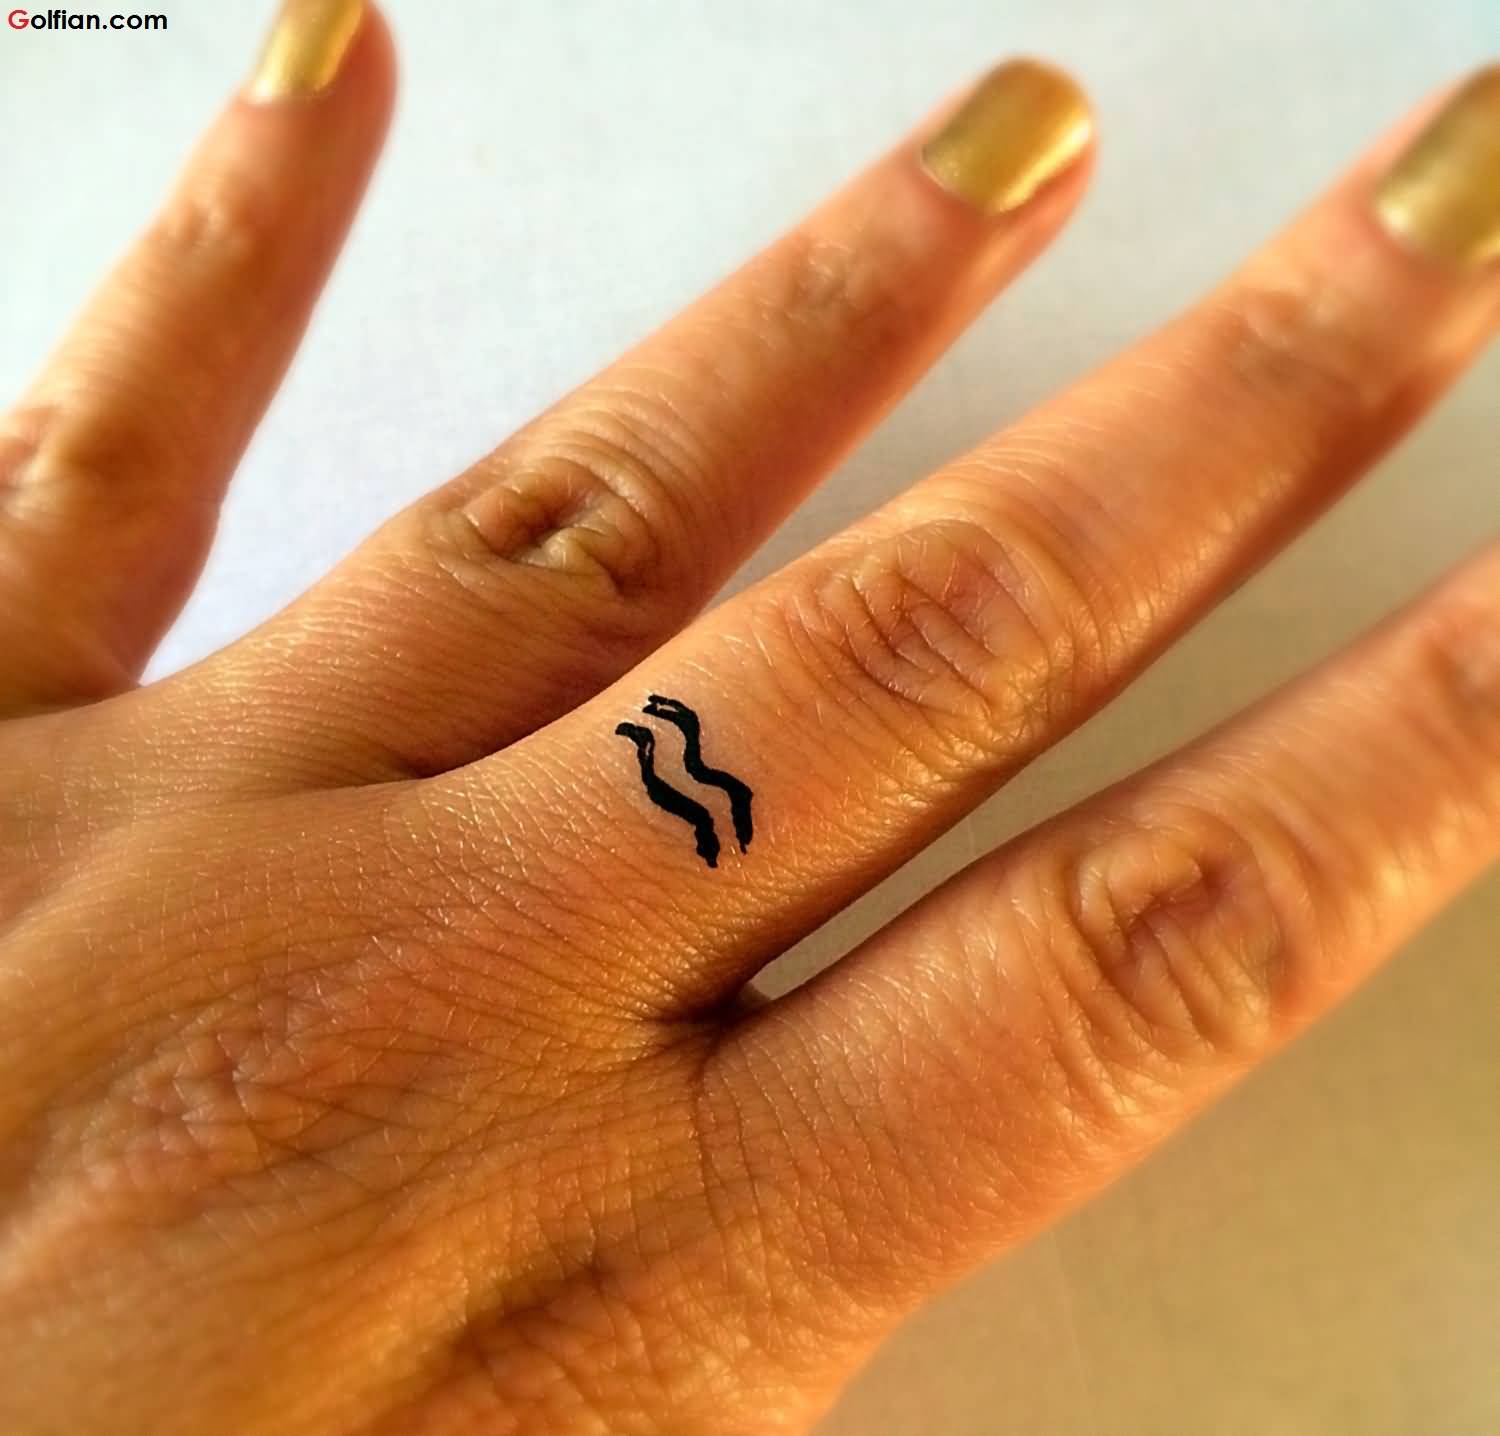 Black Aquarius Zodiac Sign Tattoo On Left Hand Finger